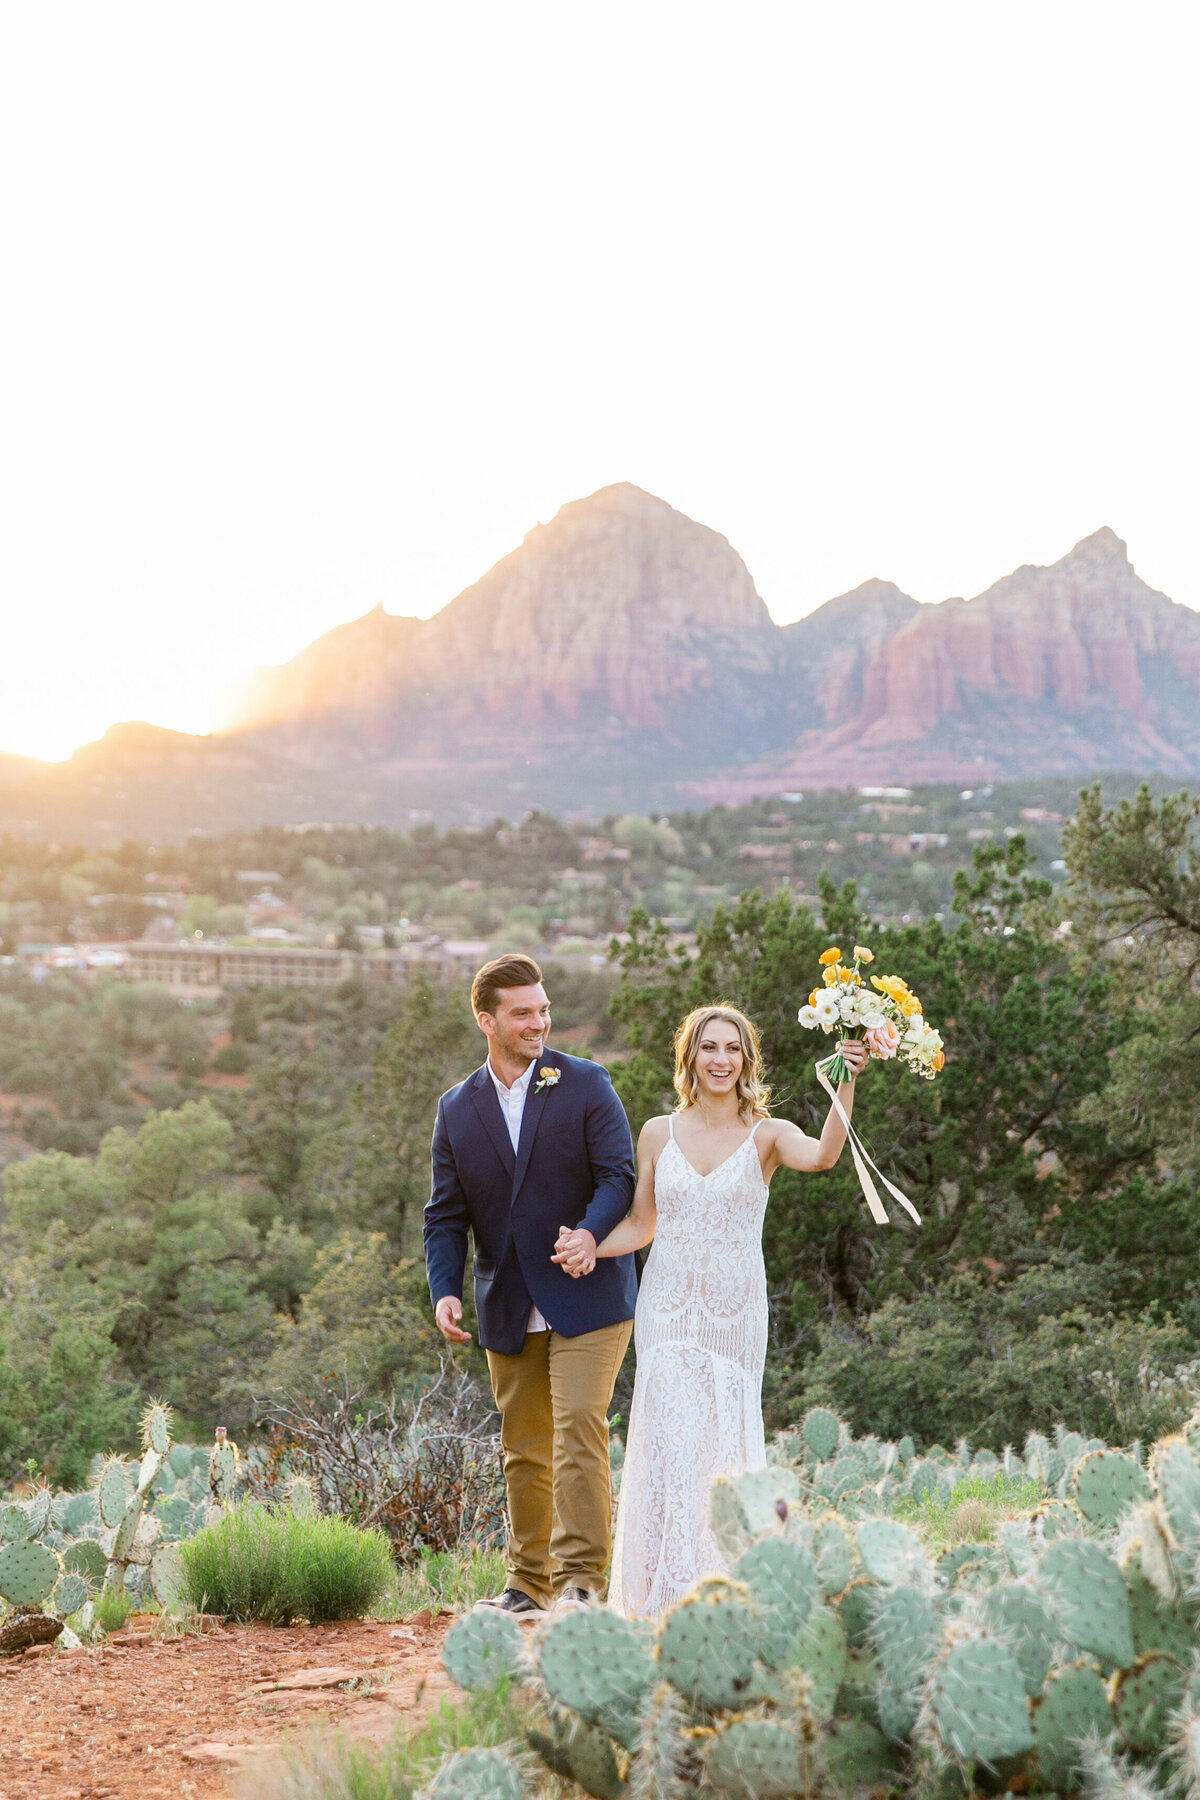 Karlie Colleen Photography - Sedona Arizona Elopement Wedding Photographer - Maxwell & Corynne-162